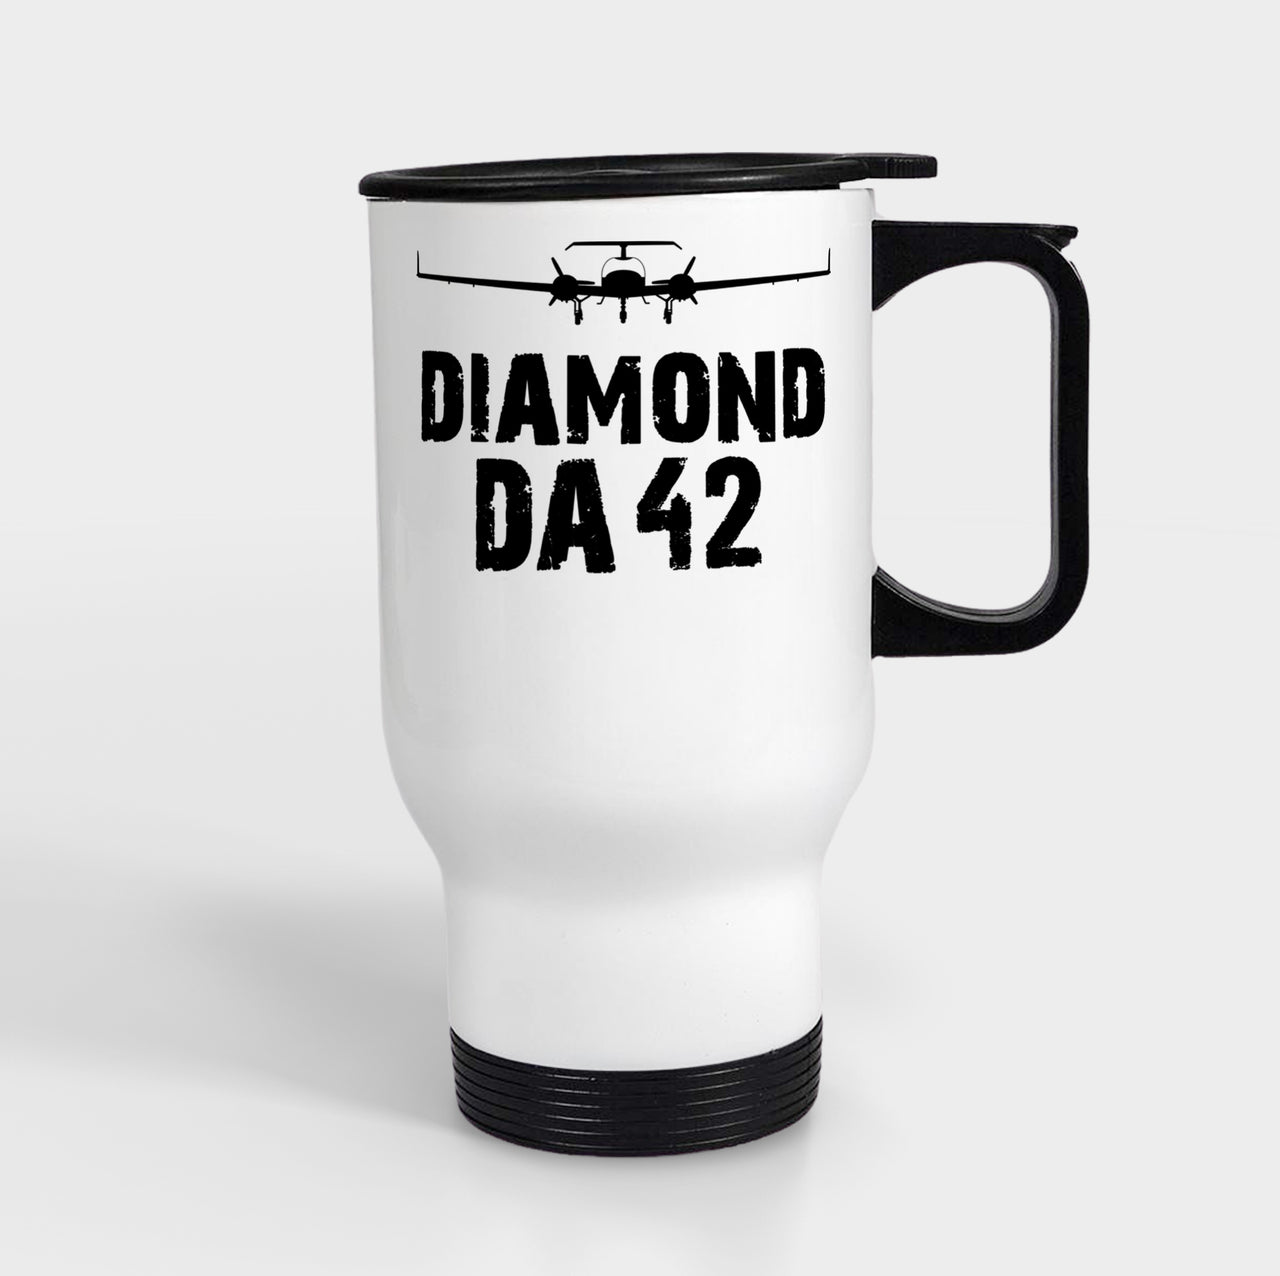 Diamond DA42 & Plane Designed Travel Mugs (With Holder)